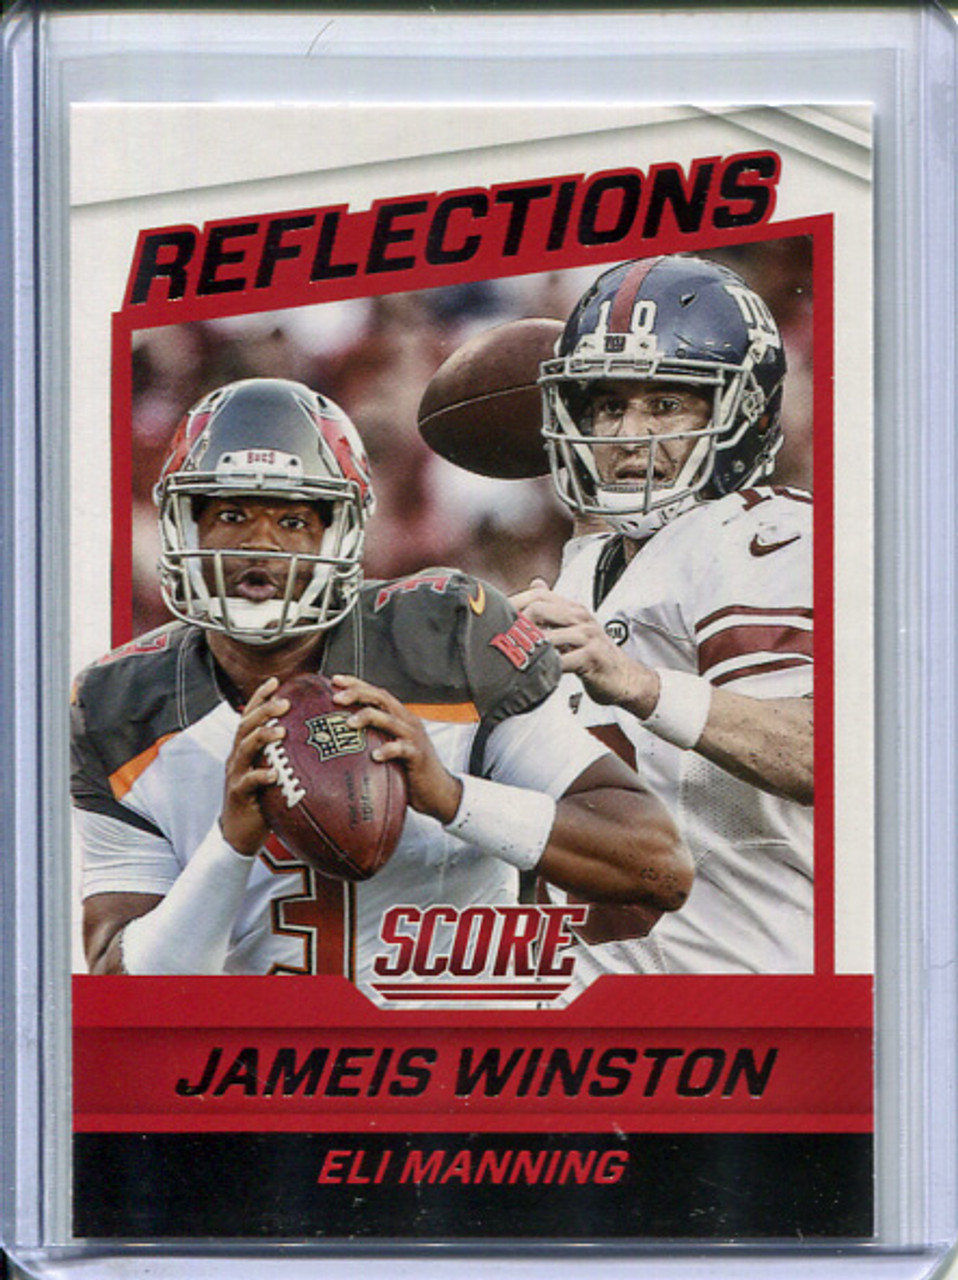 Jameis Winston, Eli Manning 2016 Score, Reflections #18